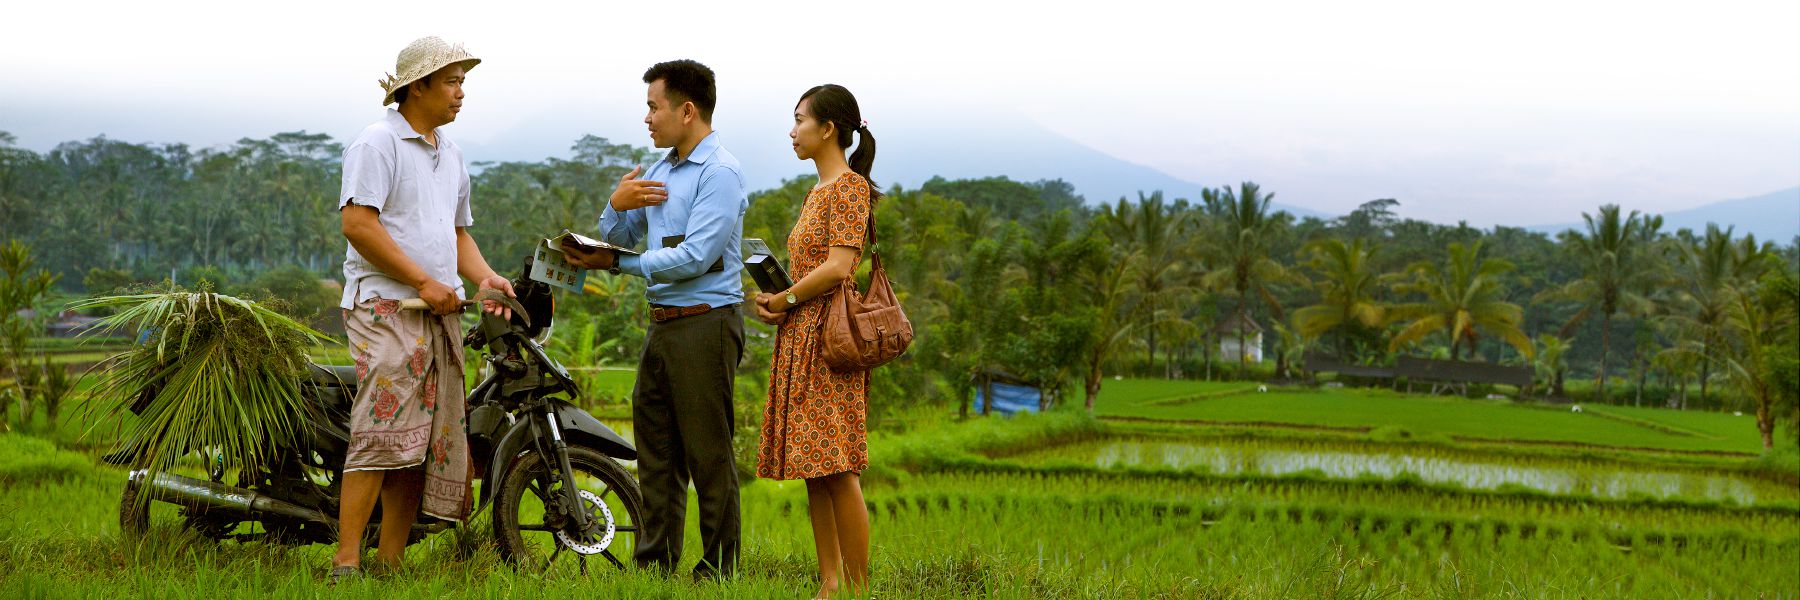 شاهدان ليهوه يبشران رجلا في حقل ارز.